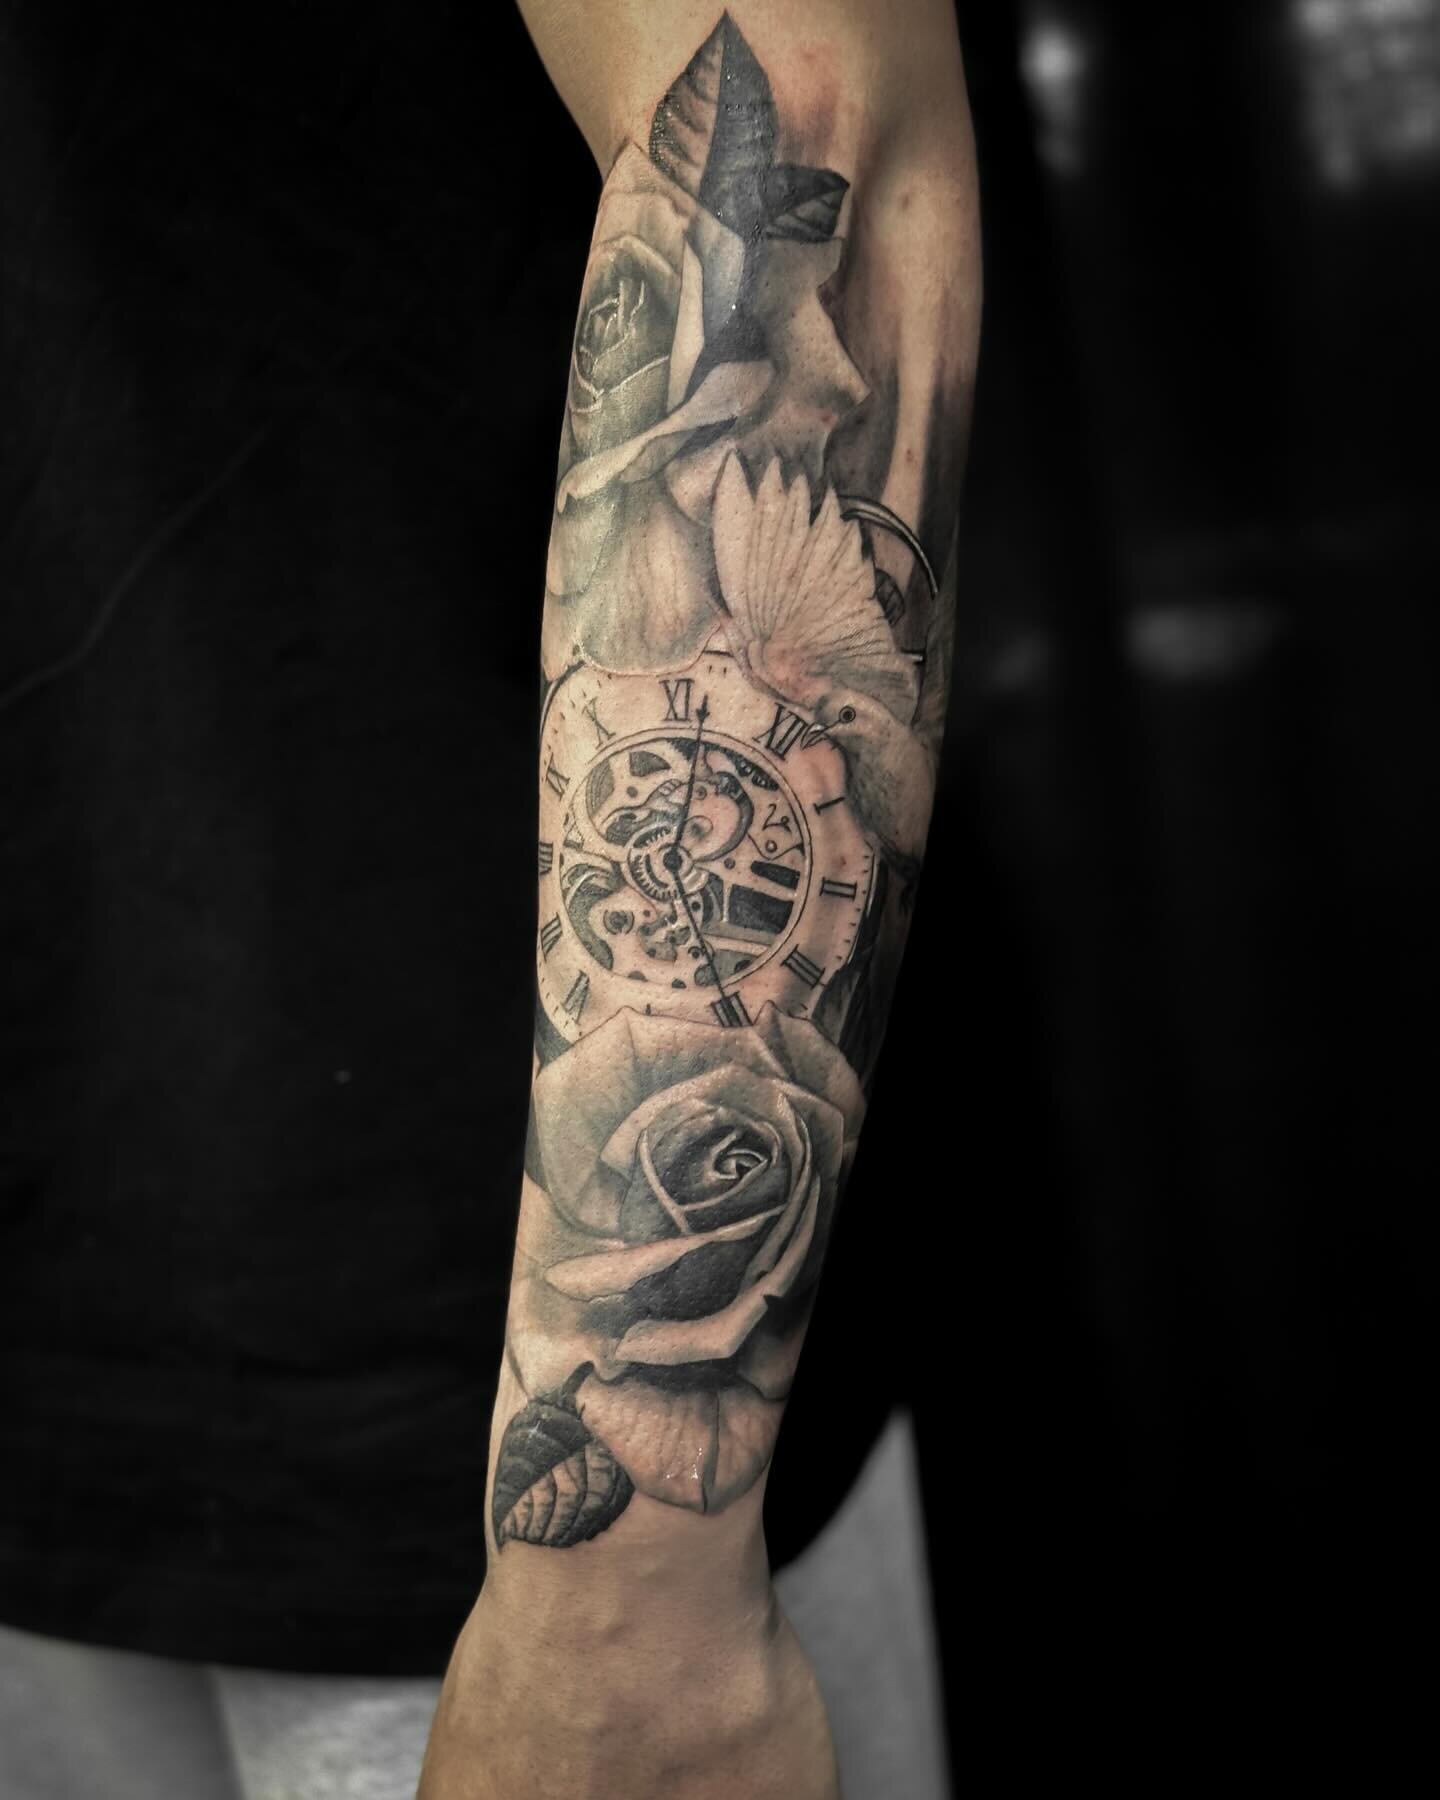 🌹 
.
.
.
.
.
#tattoo #tattoos #art #tattooartist #ink #inked #photooftheday #illustration #tattooed #tattooideas #rosetattoo #birsfelden #basel #studio #switzerland #tattooing #zurich #tattoed #tattooformen  #thirtyfourtattoo #clocktattoo #floraltat